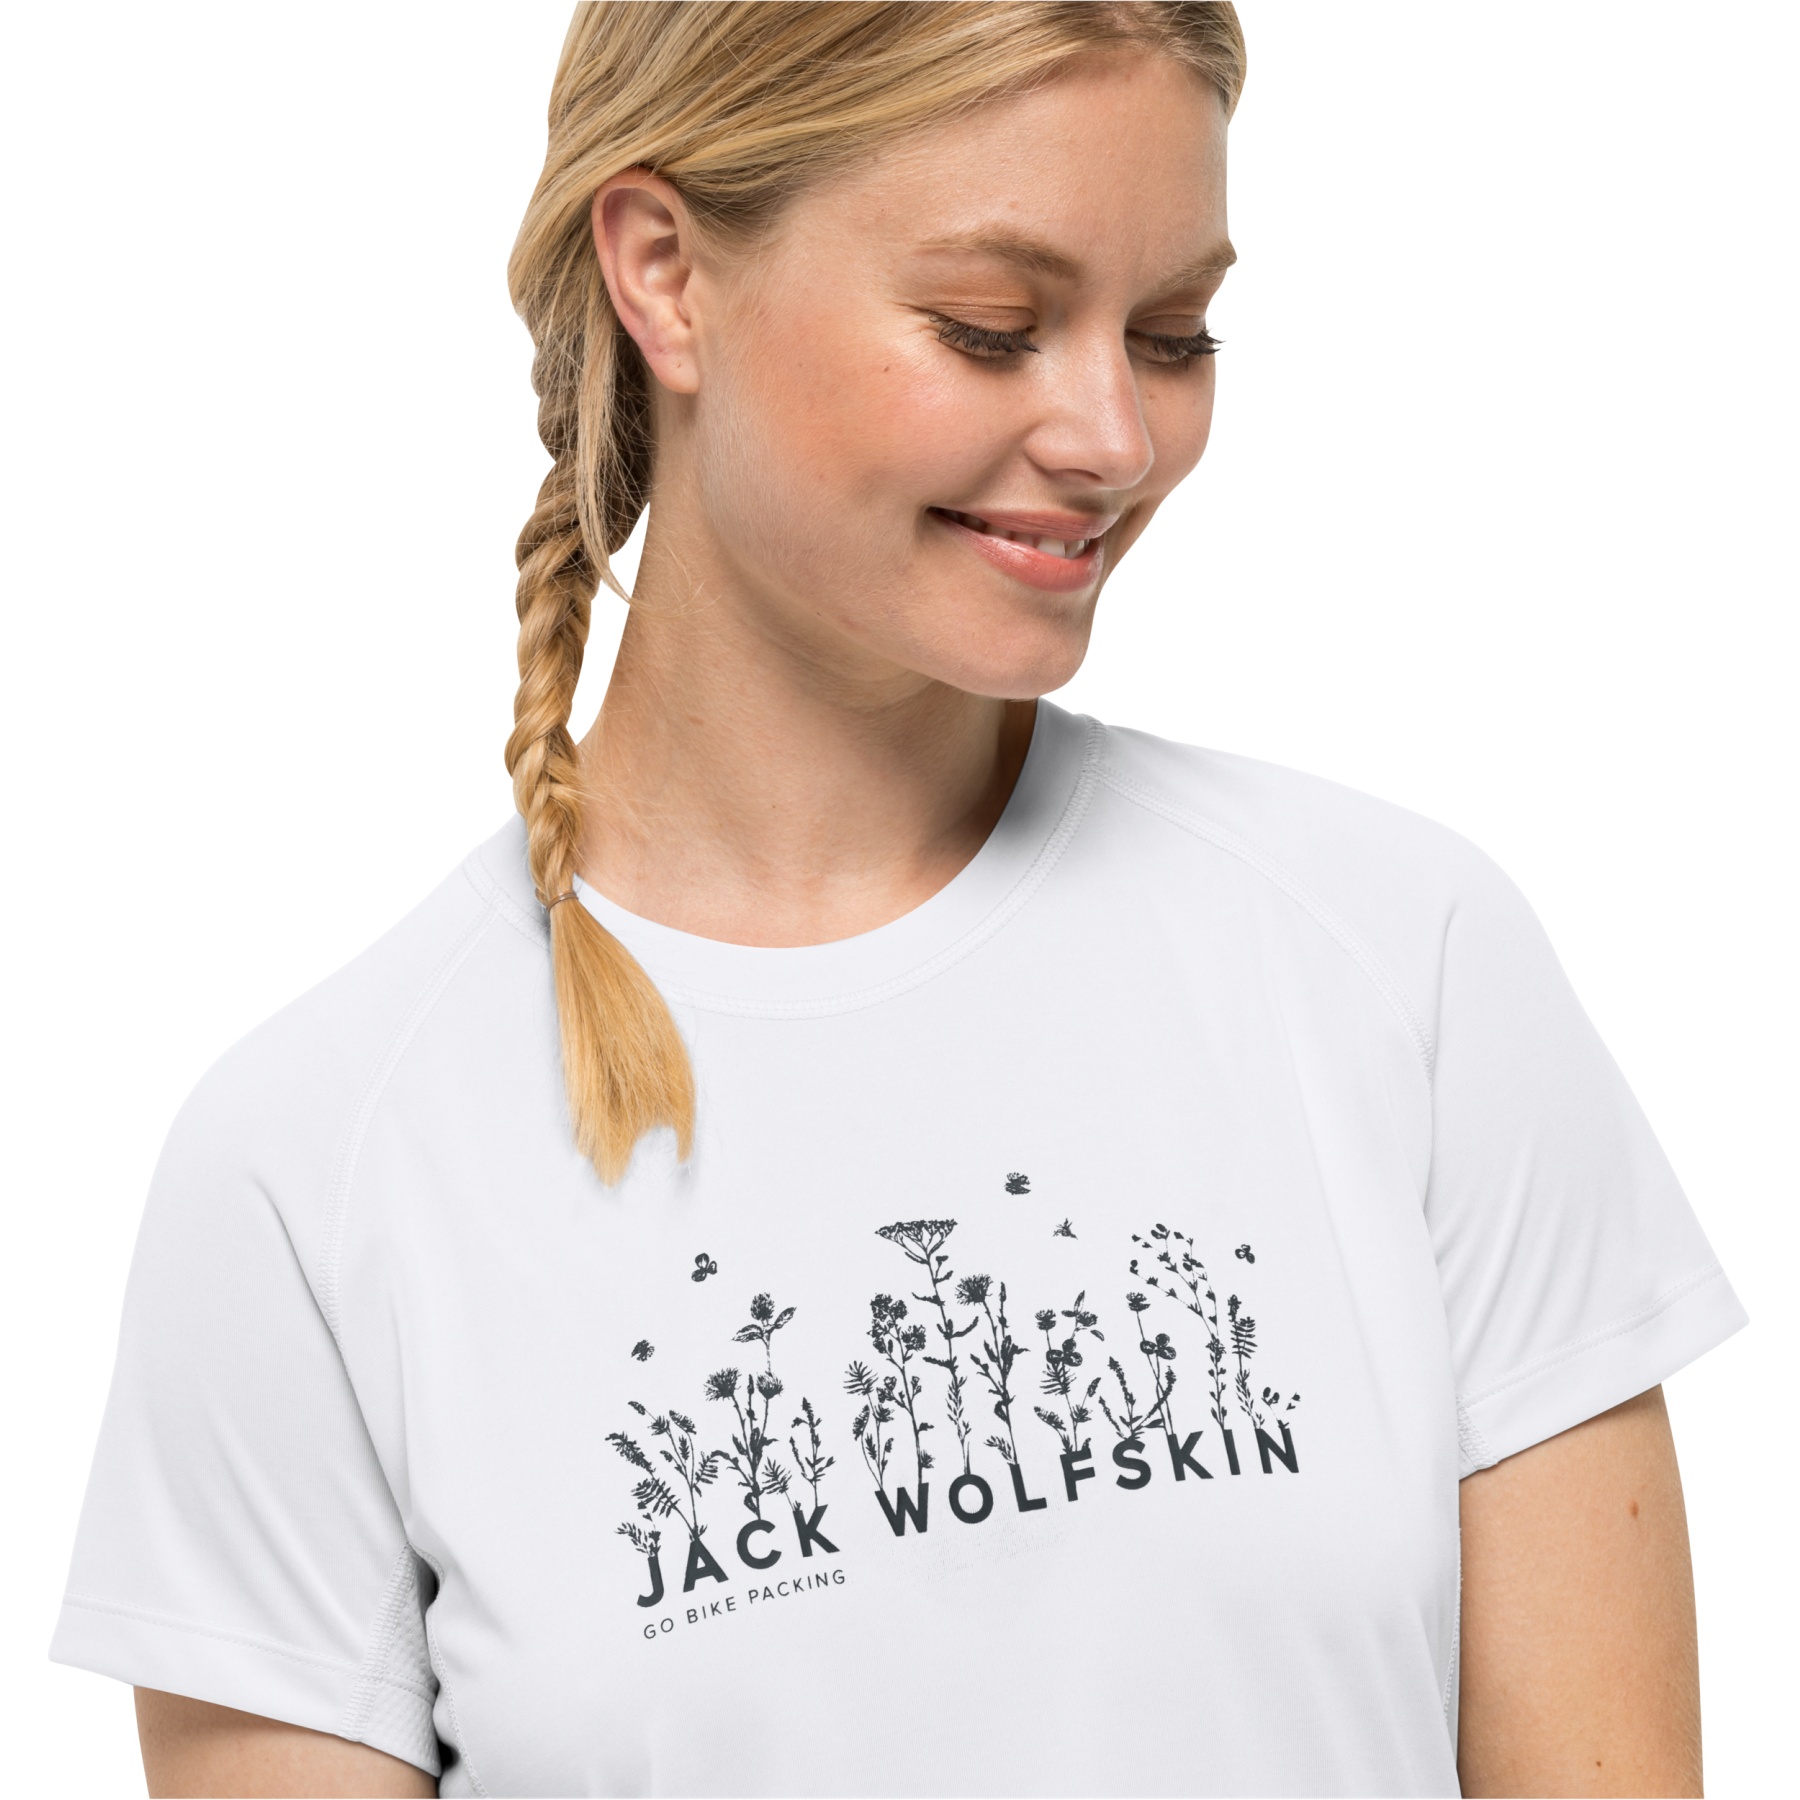 BIKE24 T-Shirt Damen | Morobbia Jack Vent cloud Wolfskin - weiß